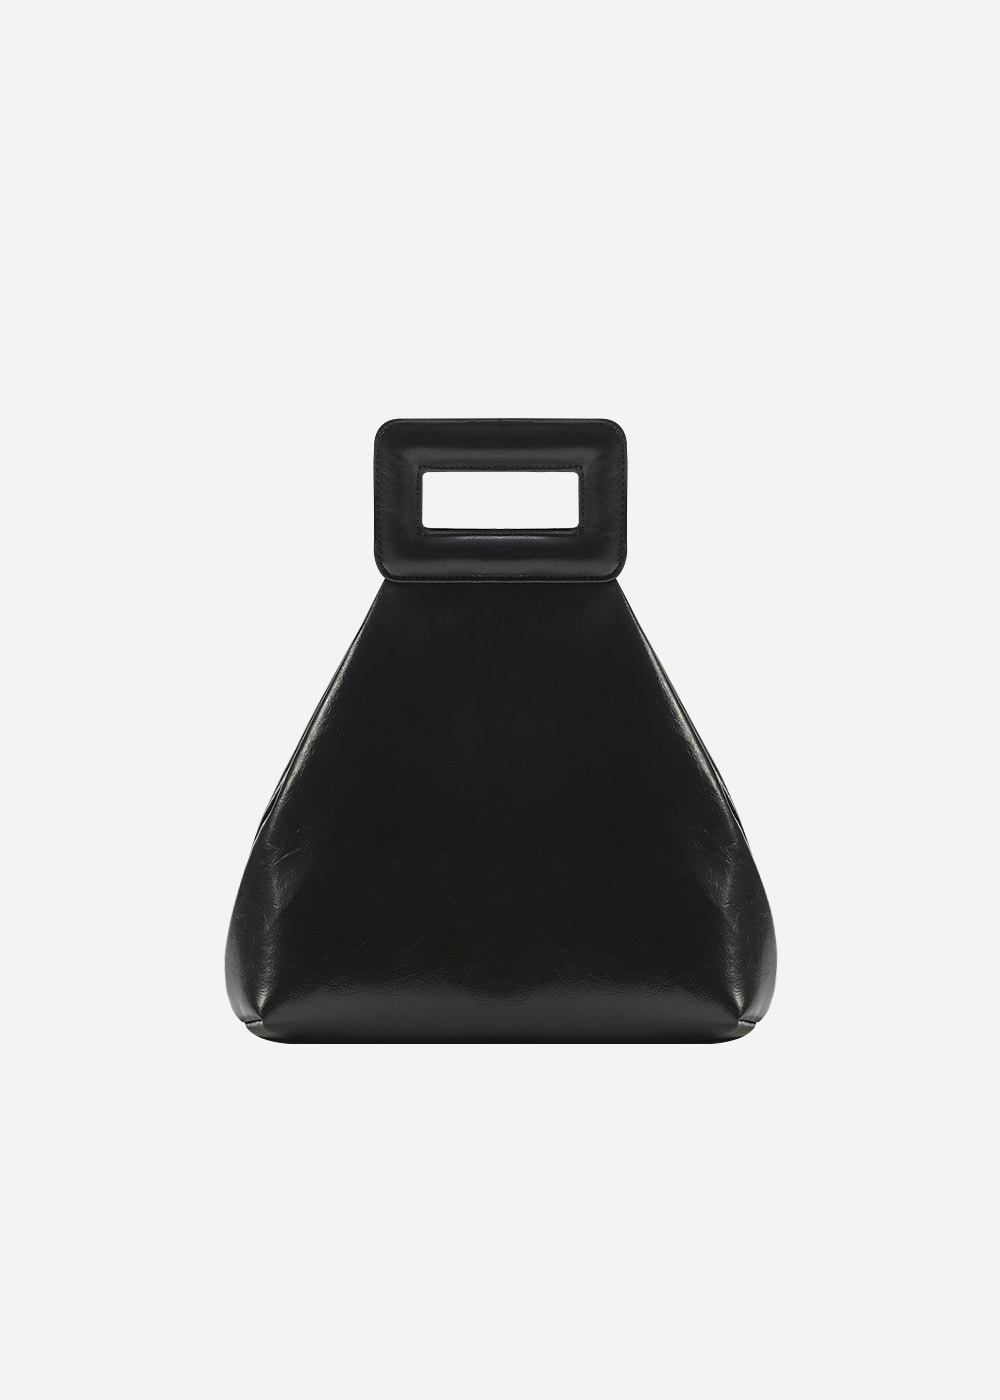 Square Handle Bagpack (Bag + Backpack) Black